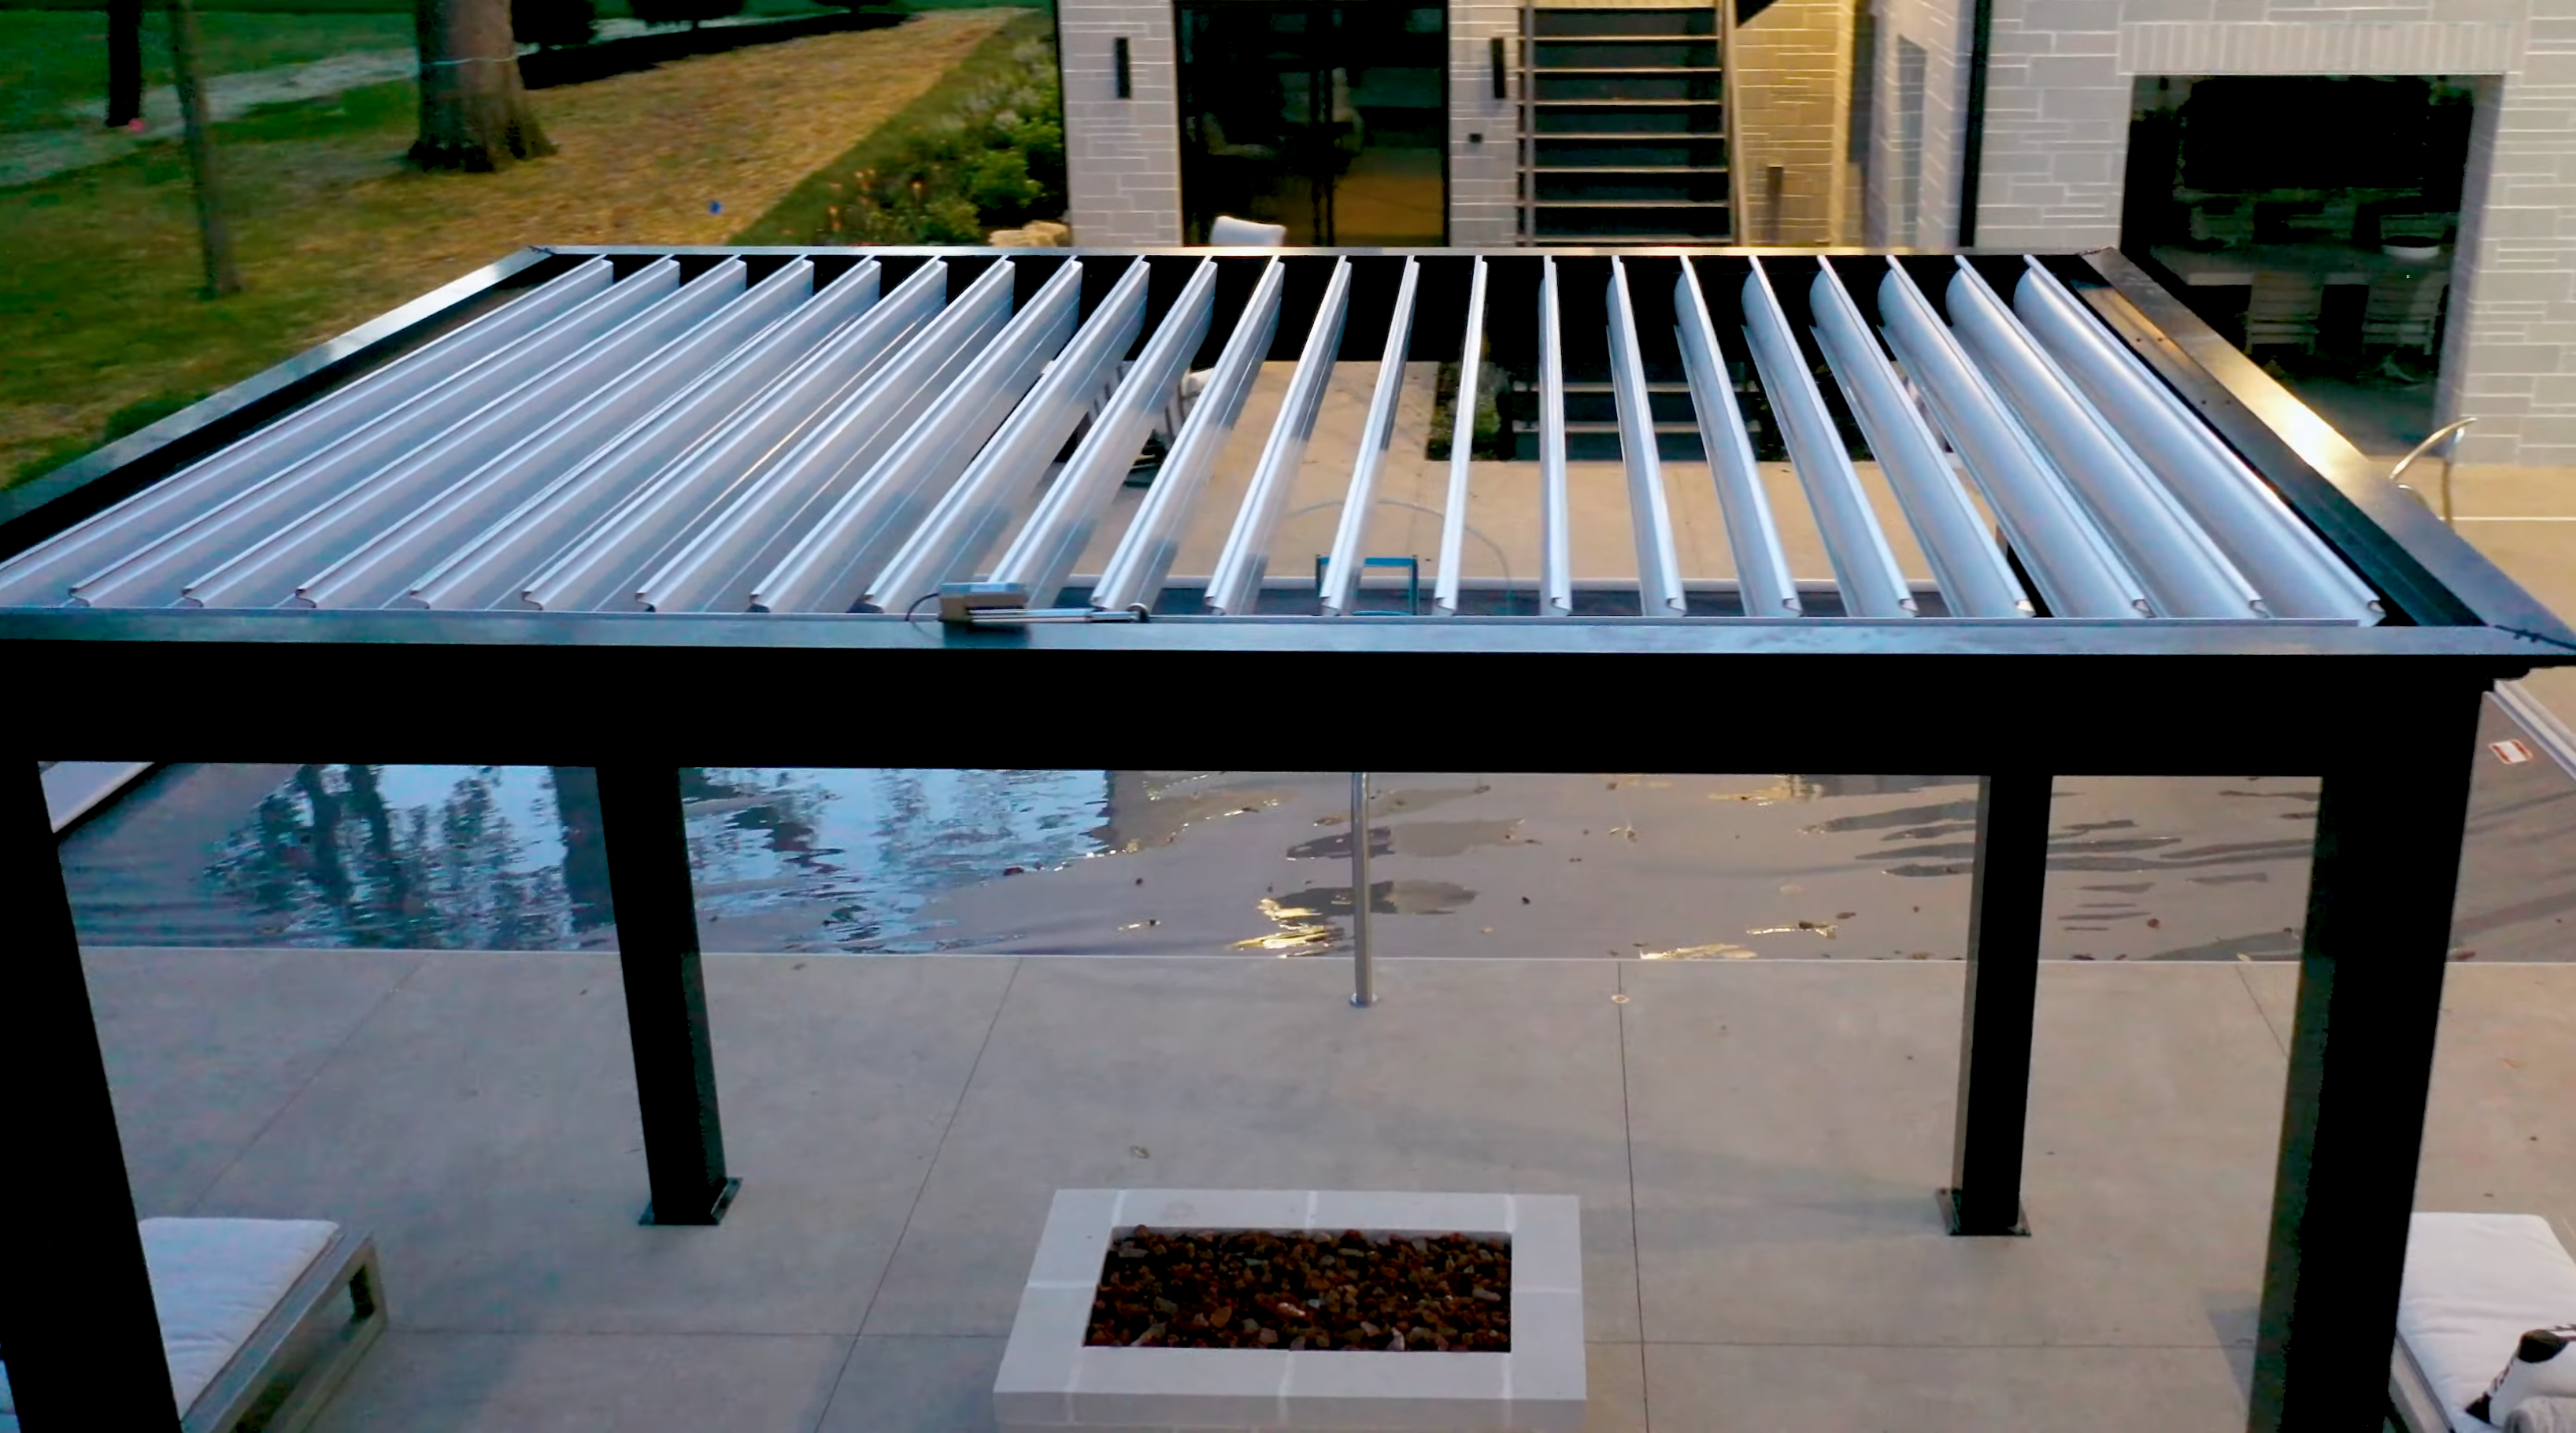 pergola on concrete by pool